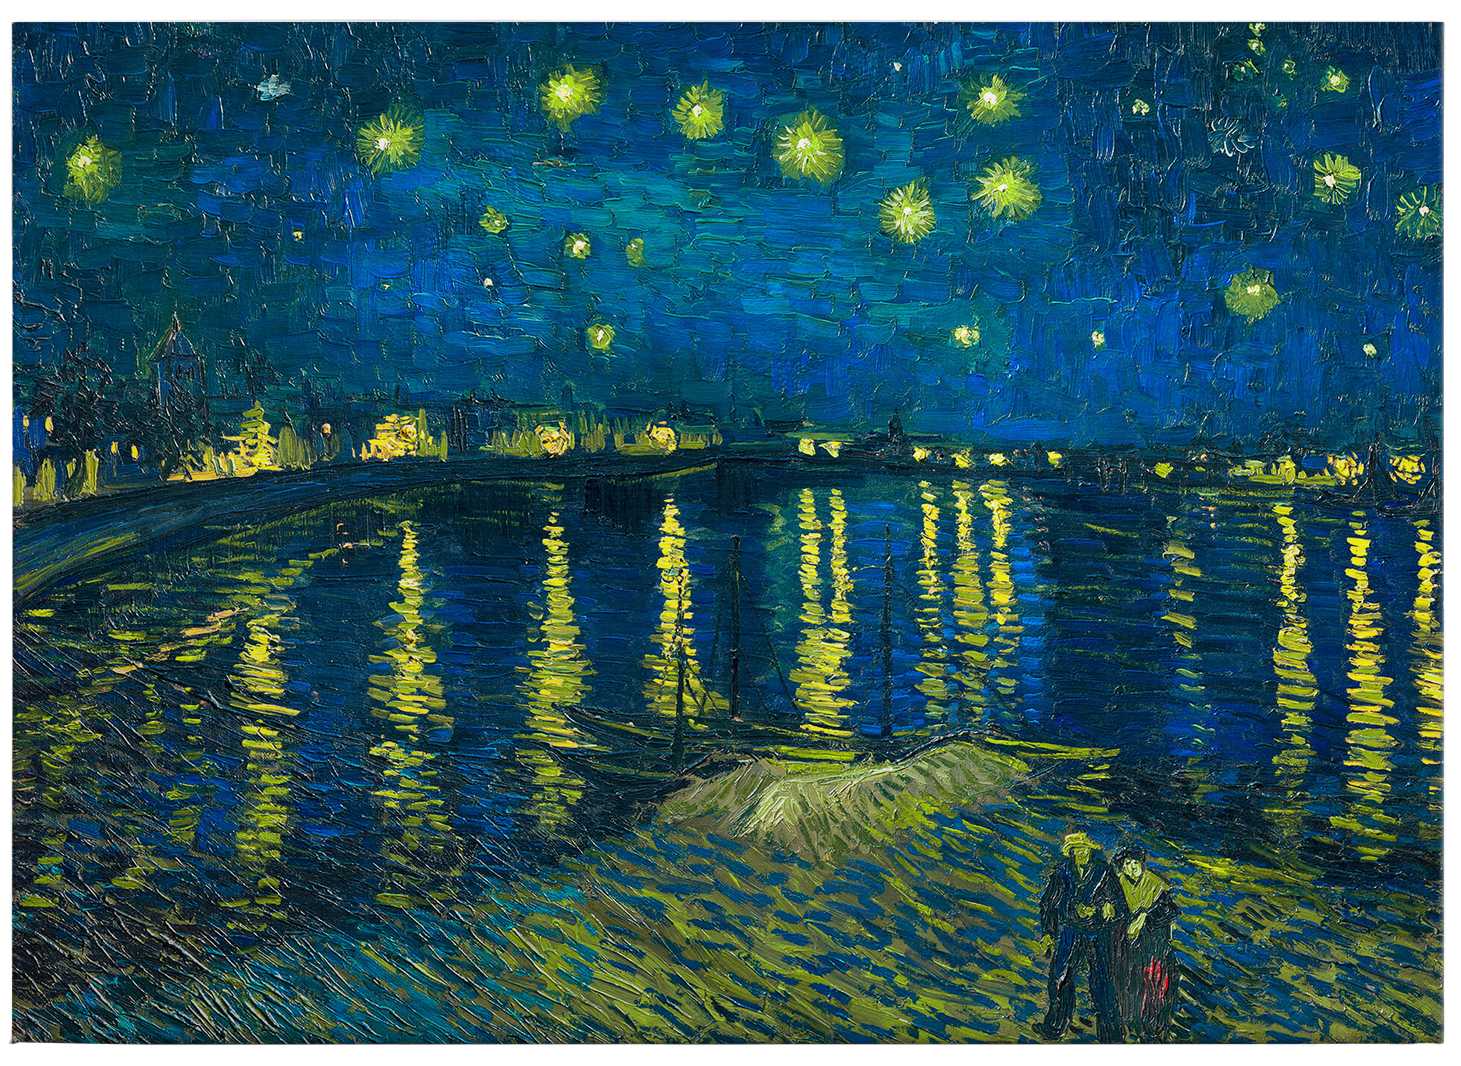             Quadro su tela "Notte stellata" di Van Gogh - 0,70 m x 0,50 m
        